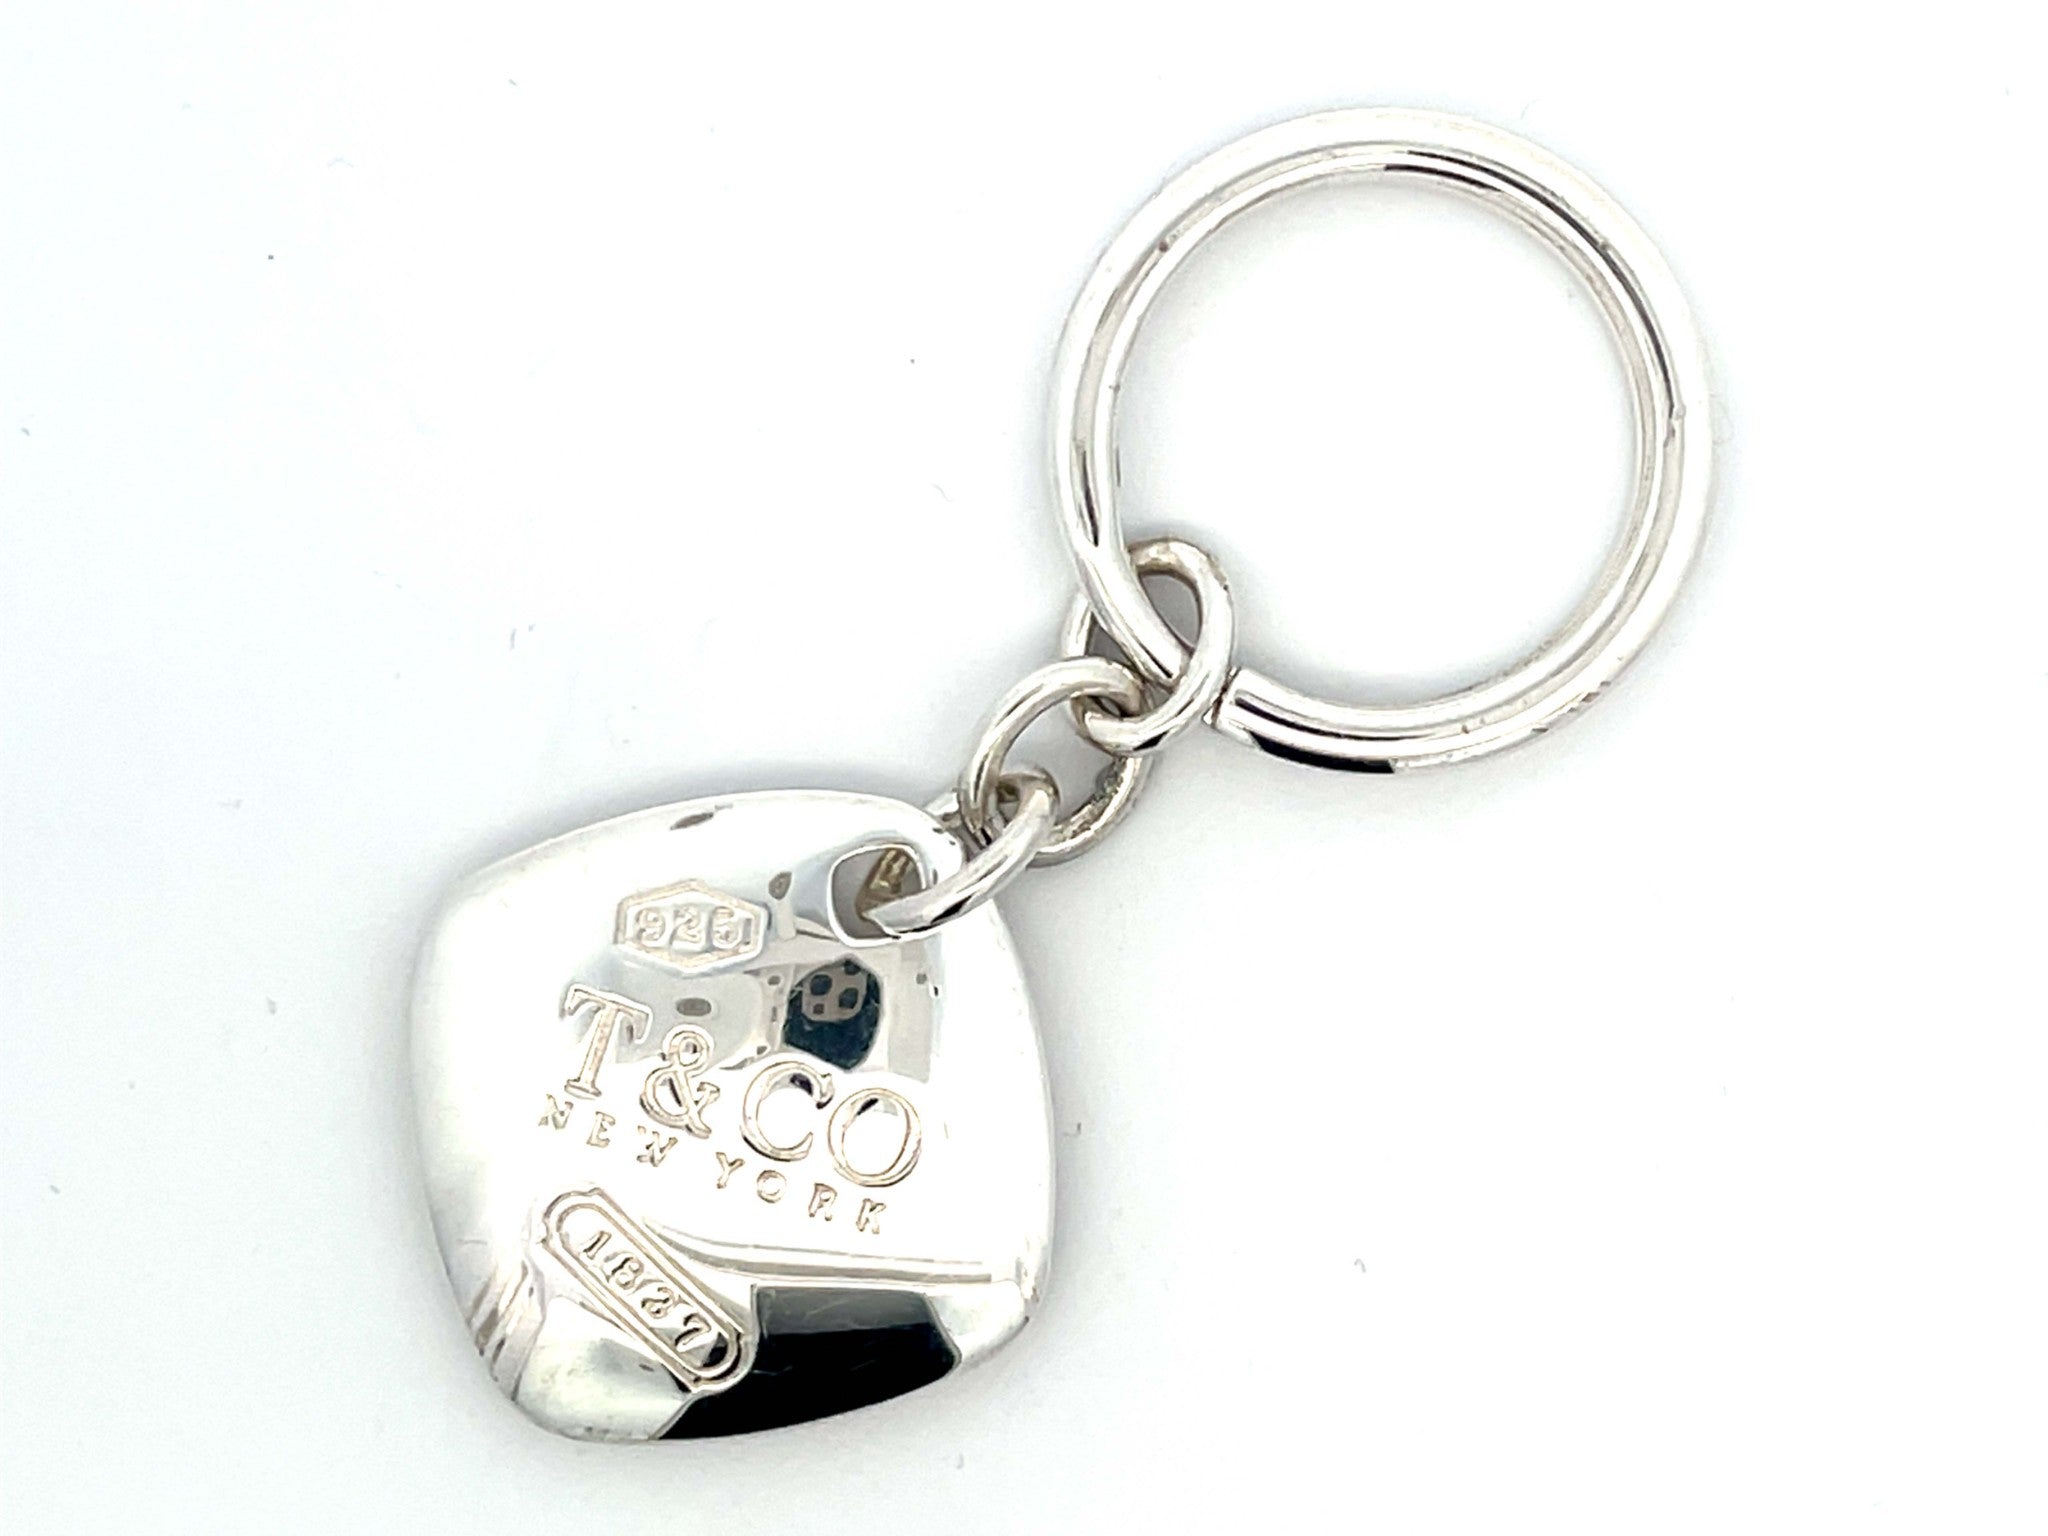 2005 Tiffany & Co. Keychain in Sterling Silver